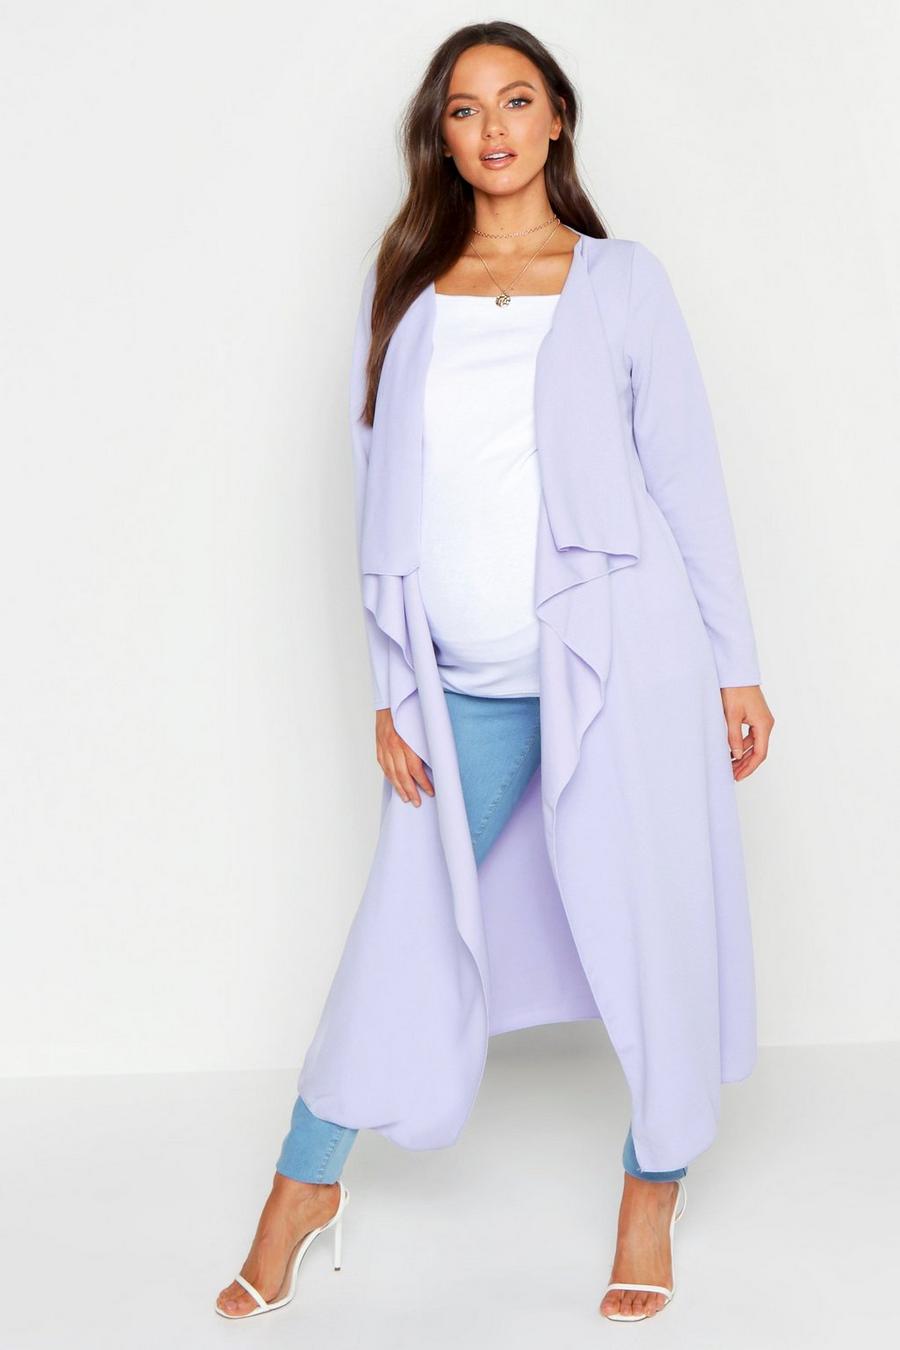 Maternité - Manteau effet cascade, Lilas violett